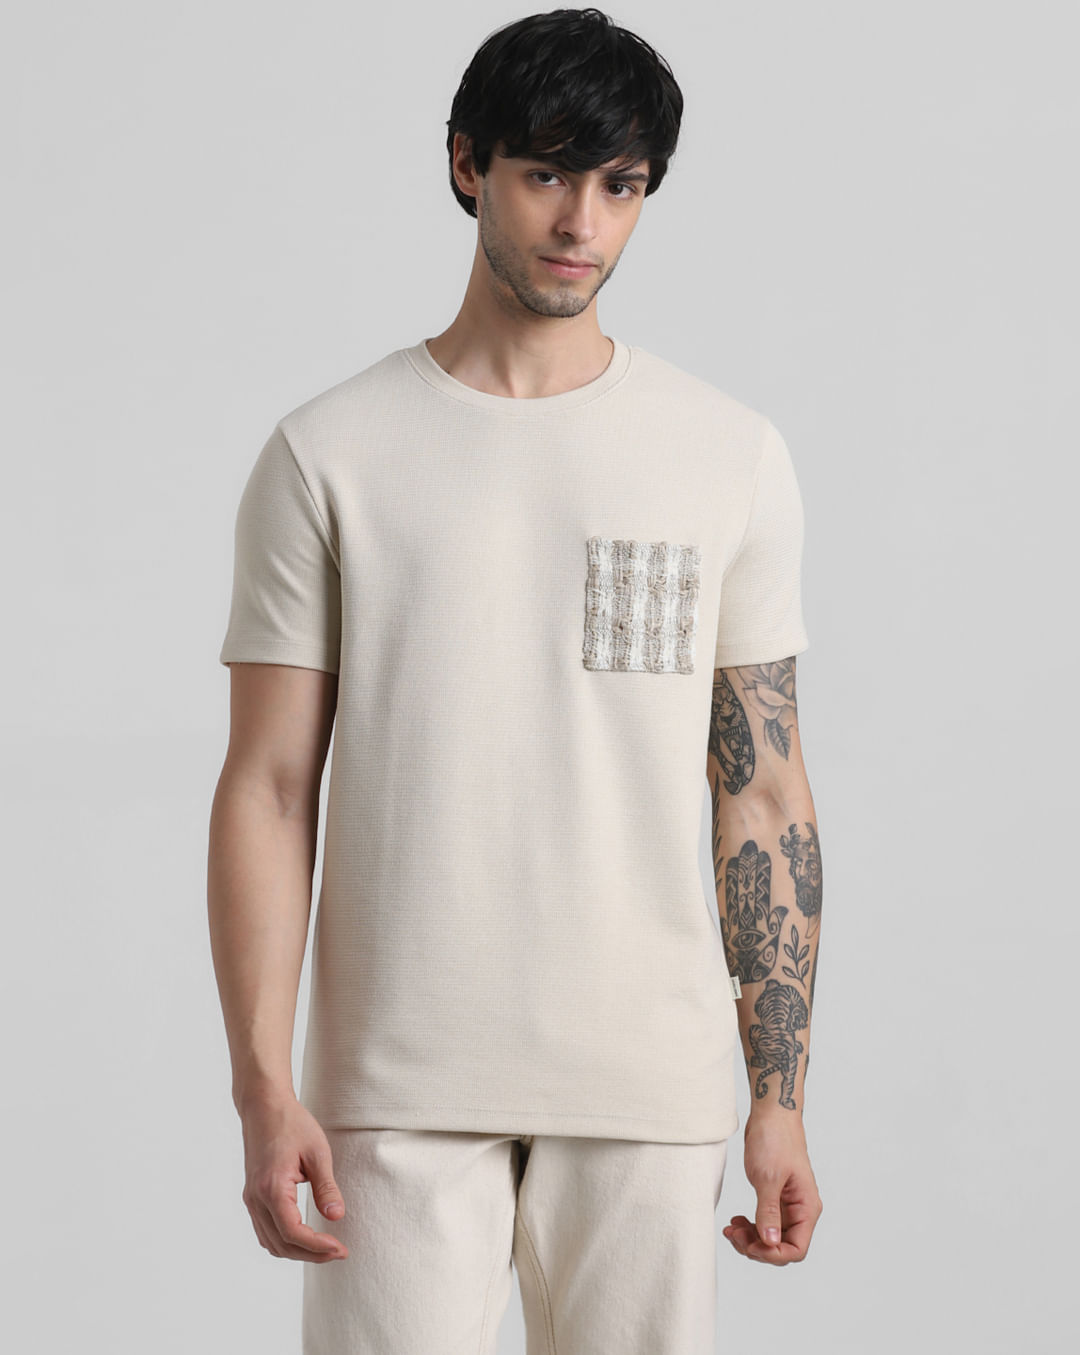 Soft-Washed Chest-Pocket Crew-Neck T-Shirt for Men